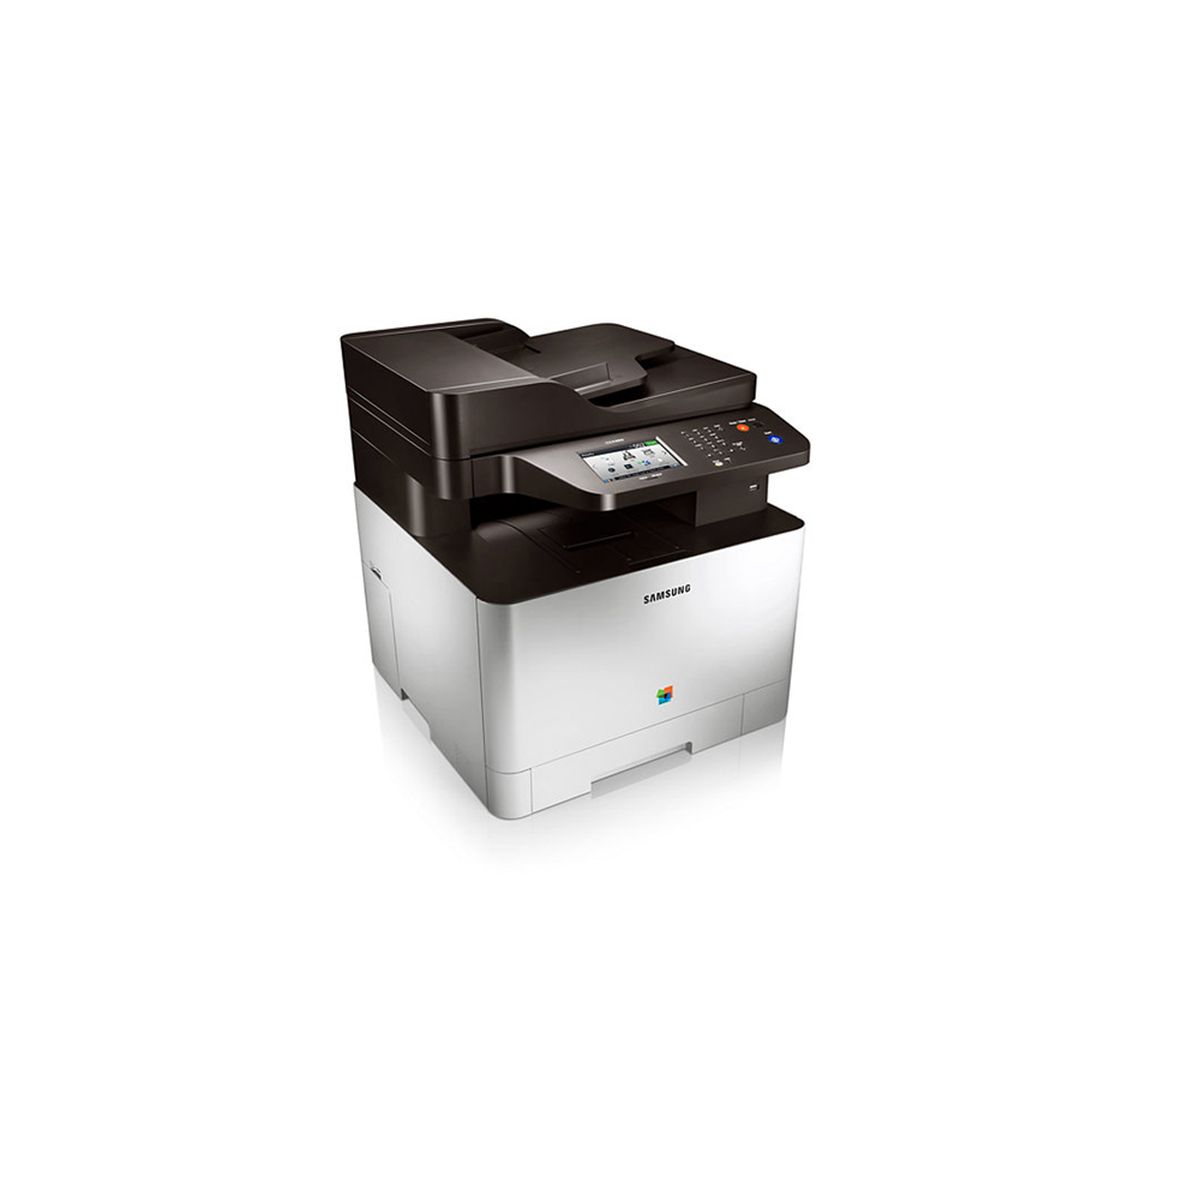 Impressora Samsung CLX-4195 - Multifuncional Laser Colorida Duplex, Scanner,  Copiadora e Fax - Toner Vale